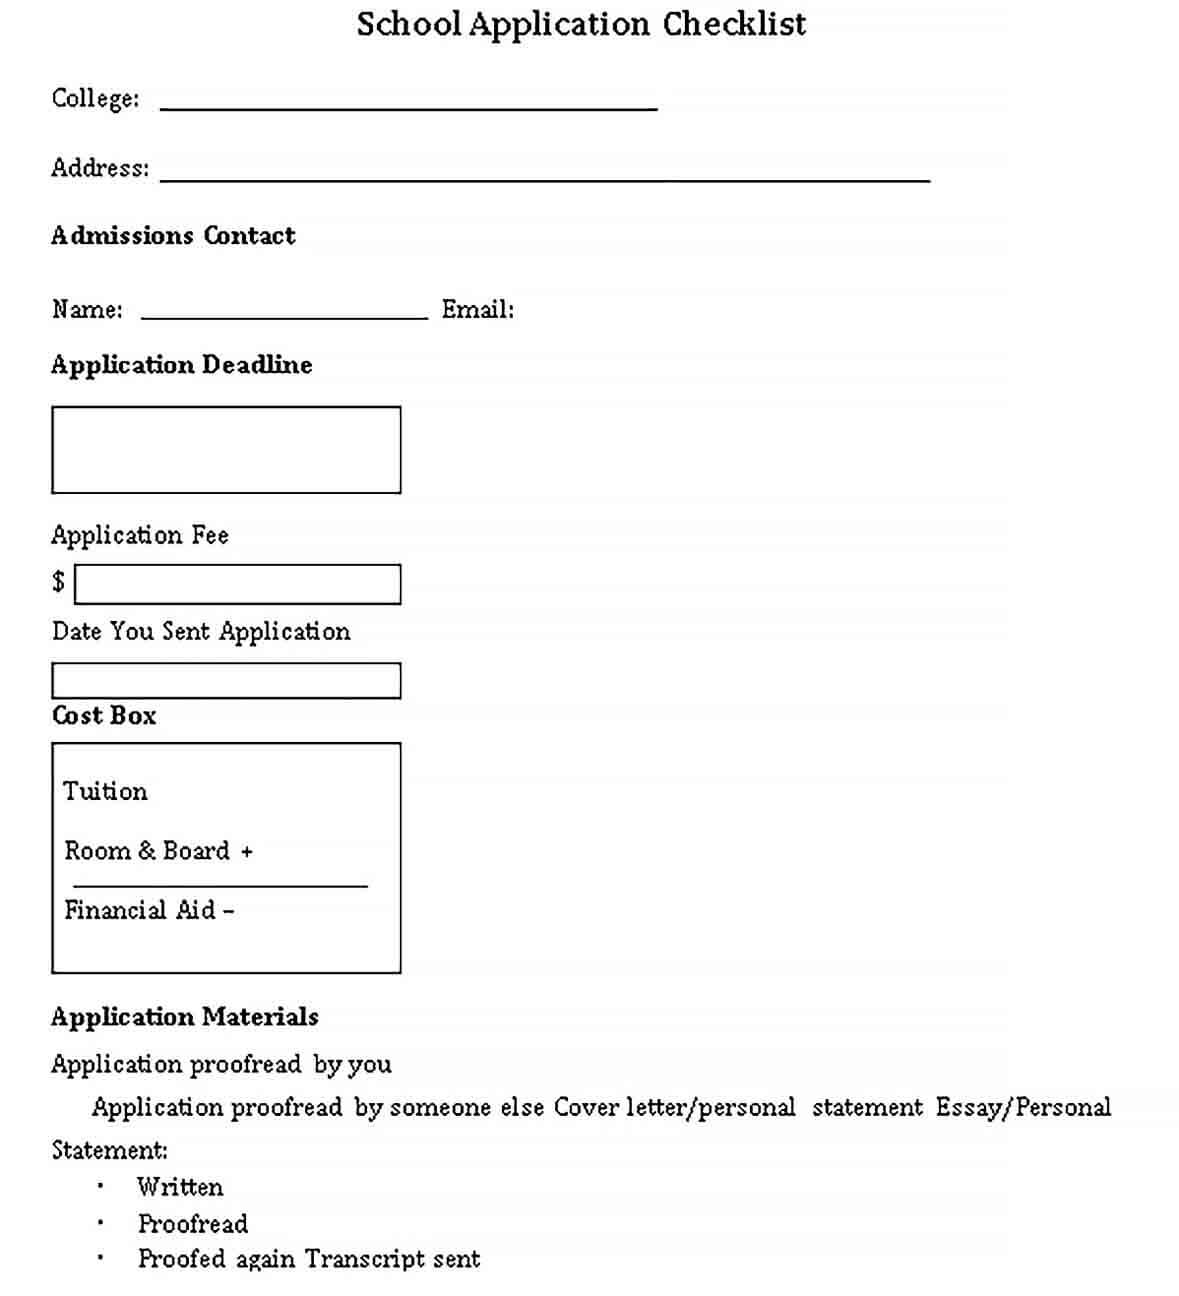 Application Checklist for School